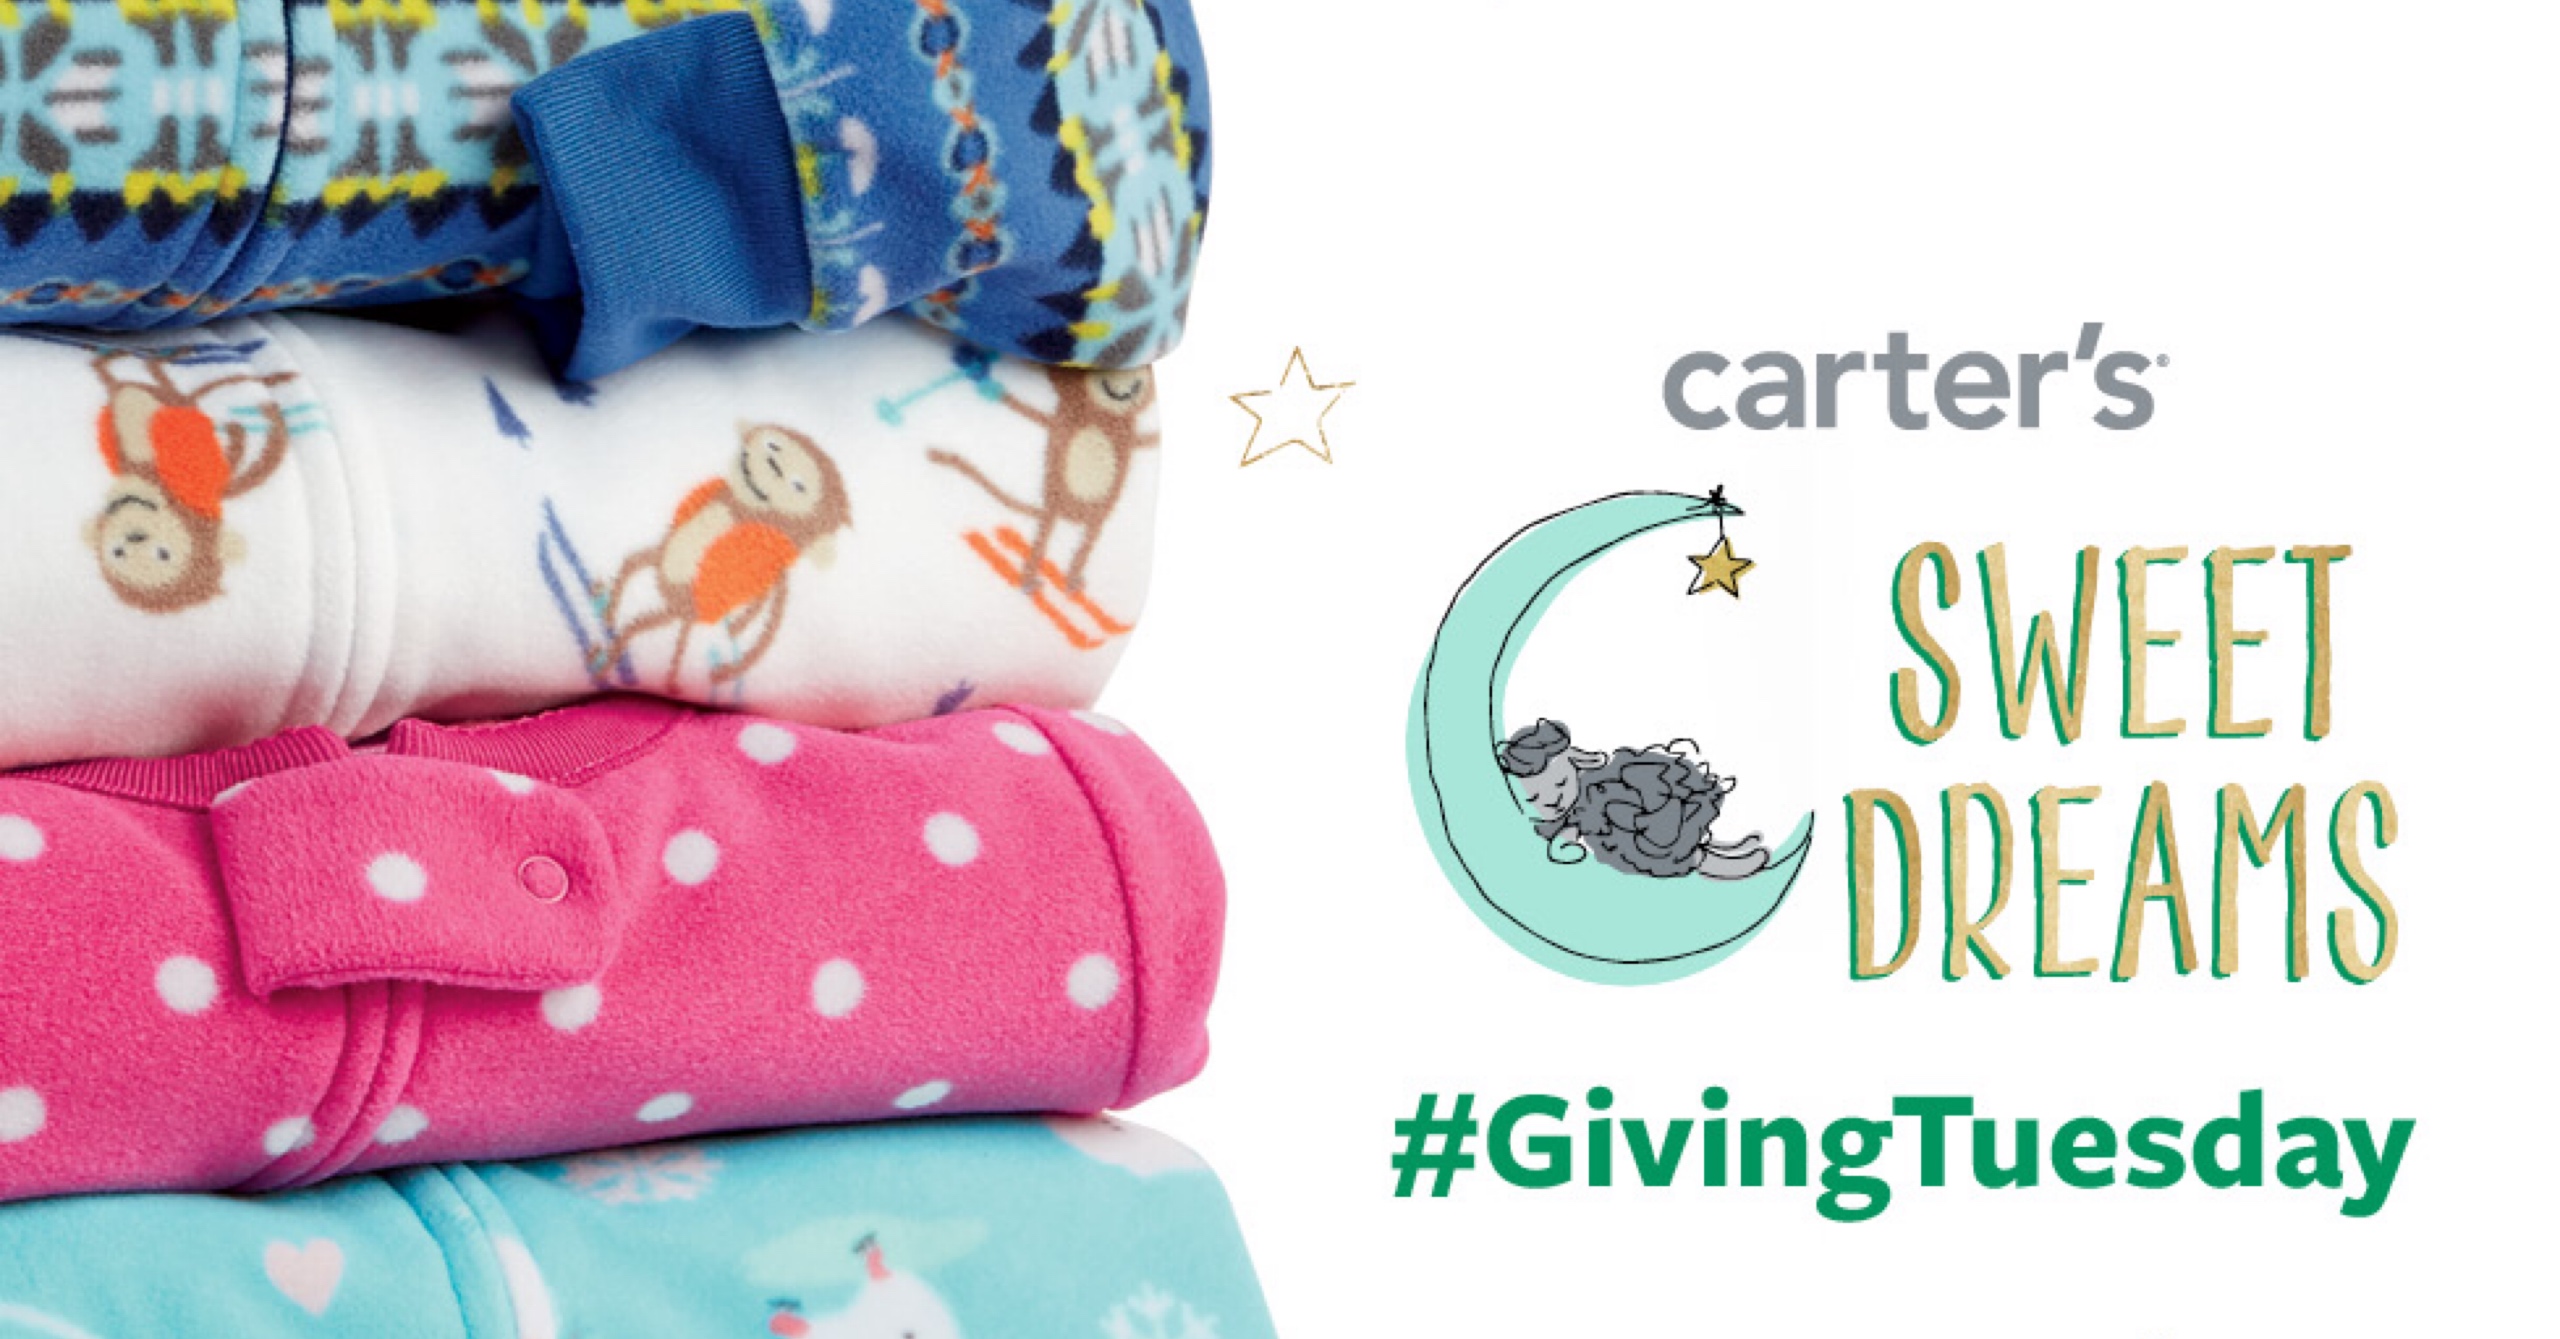 Giving Tuesday and Carter's Sweet Dreams Pajama Program © www.roastedbeanz.com #GivingTuesday #CartersSweetDreams [AD]